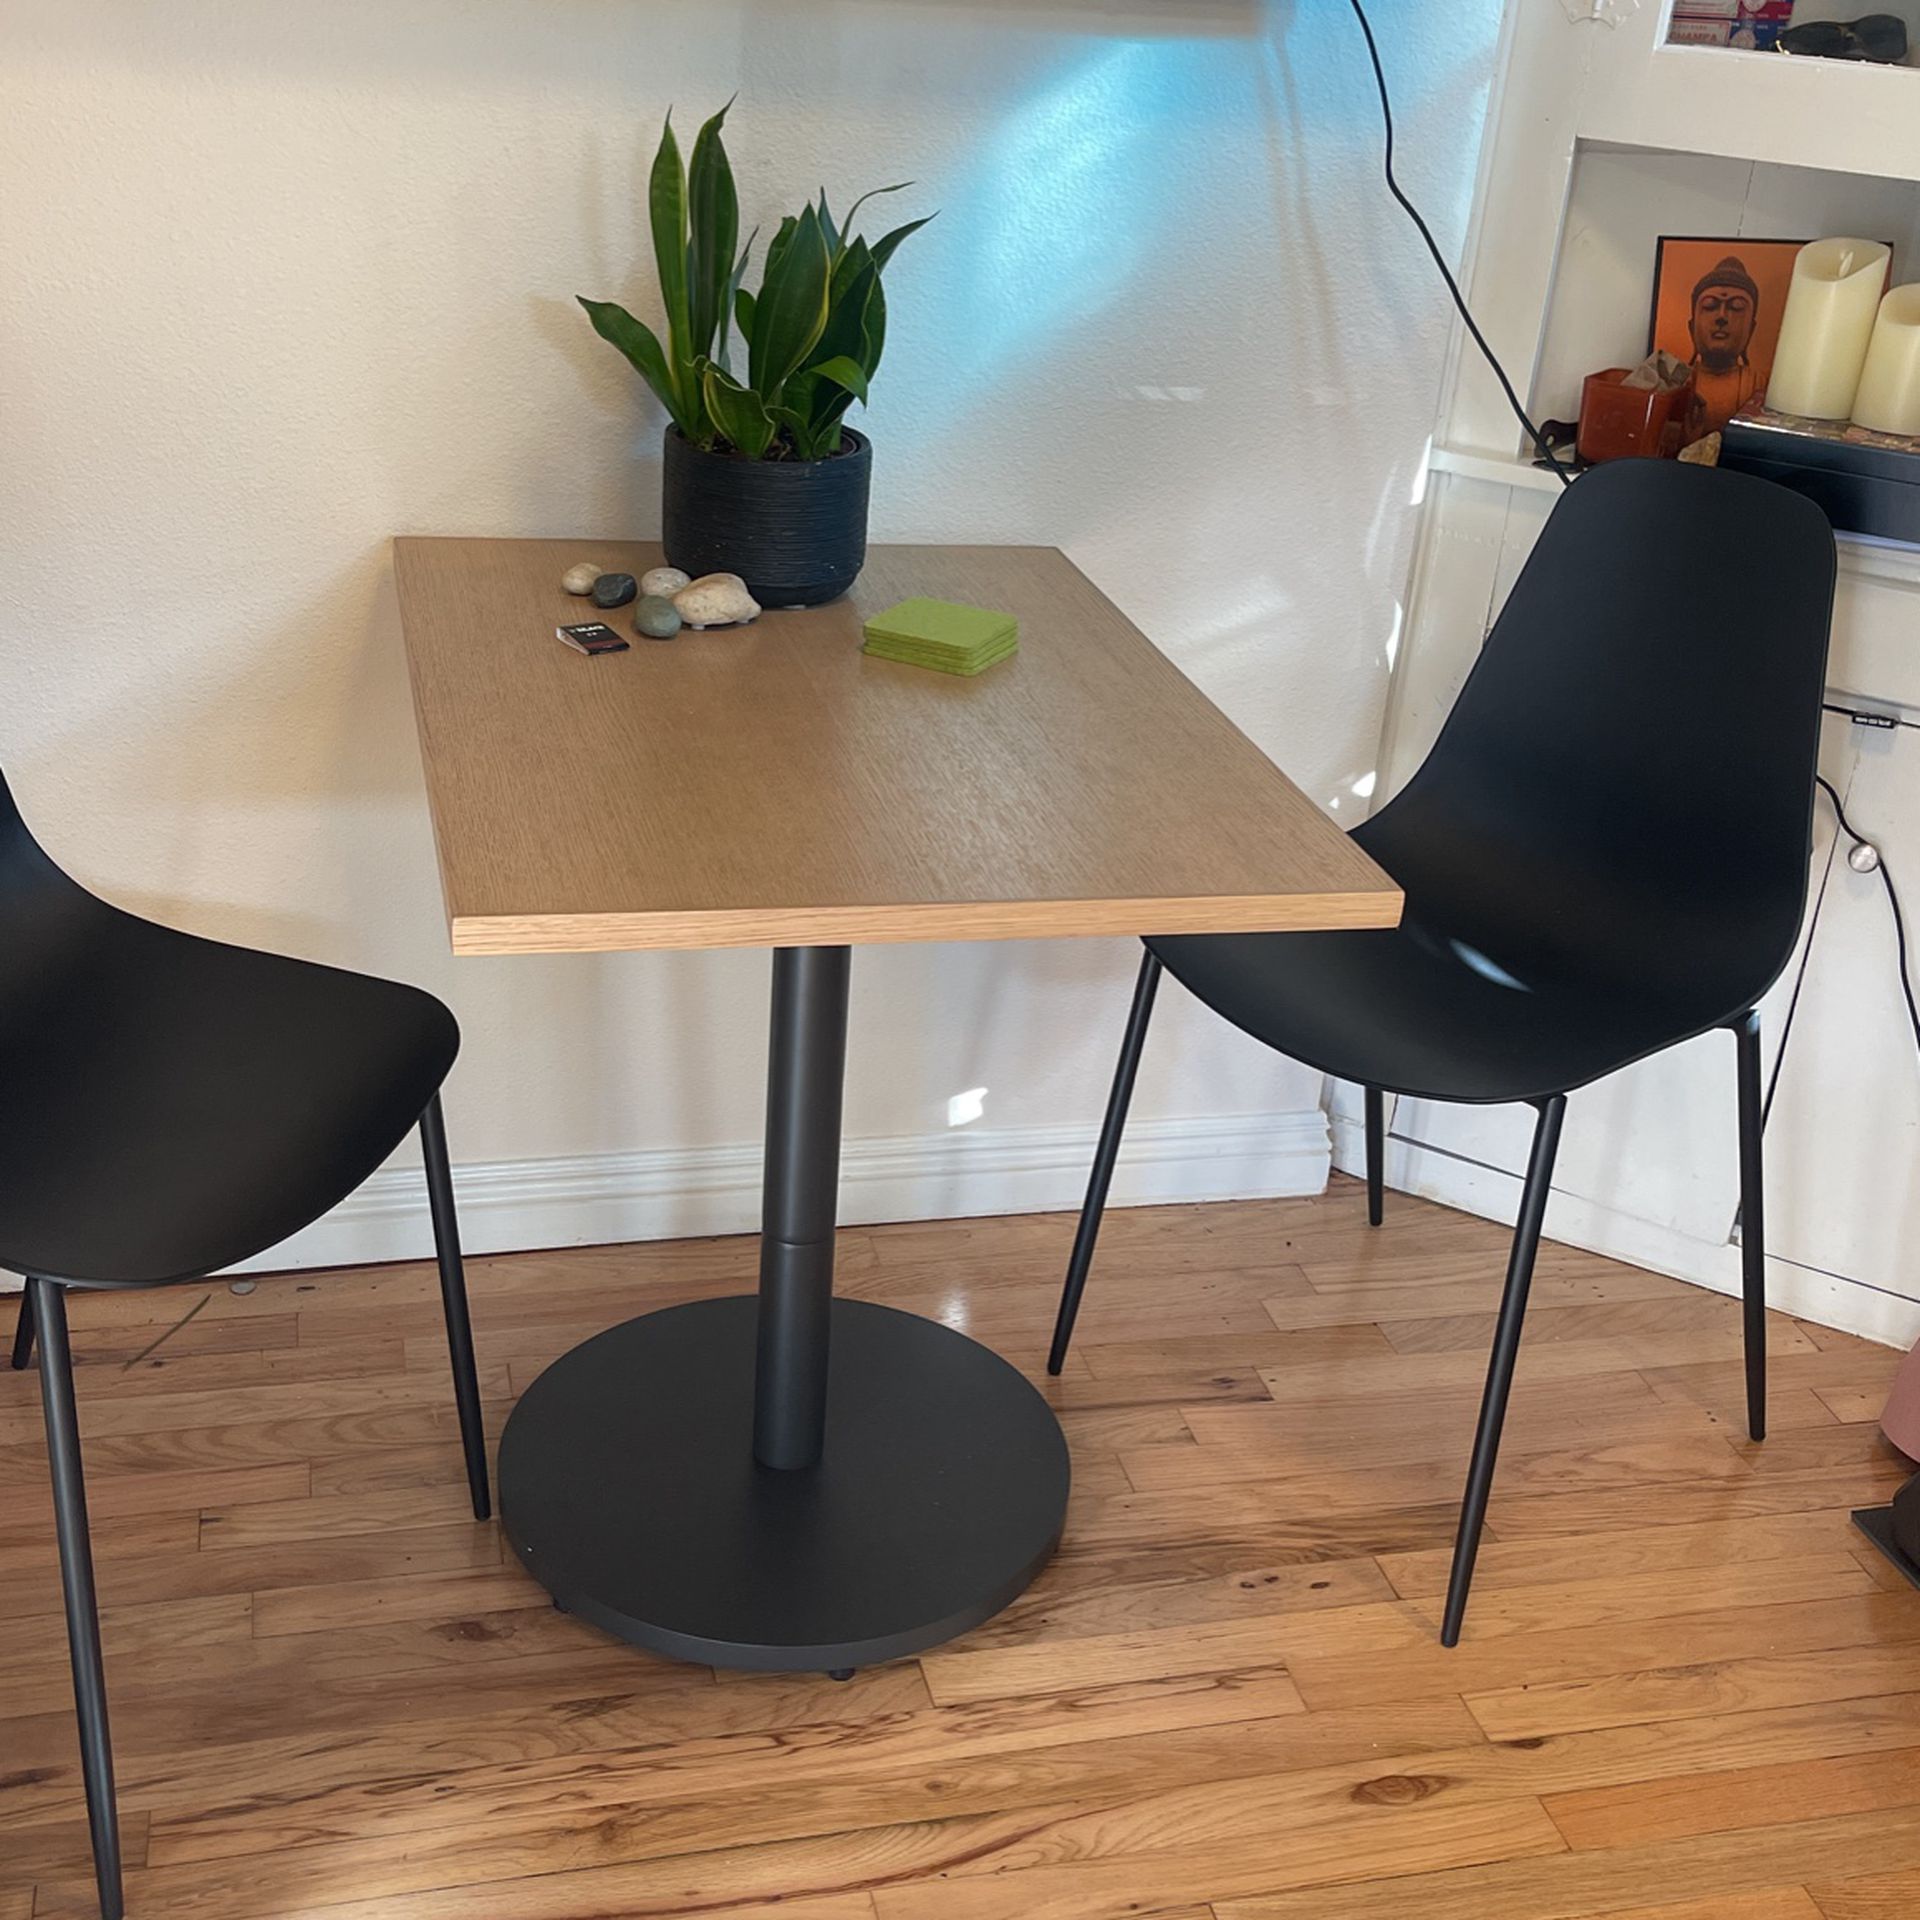 West Elm ORBIT Bistro Table  SET with chairs by https://offerup.com/redirect/?o=QXJ0aWNsZS5jb20=!